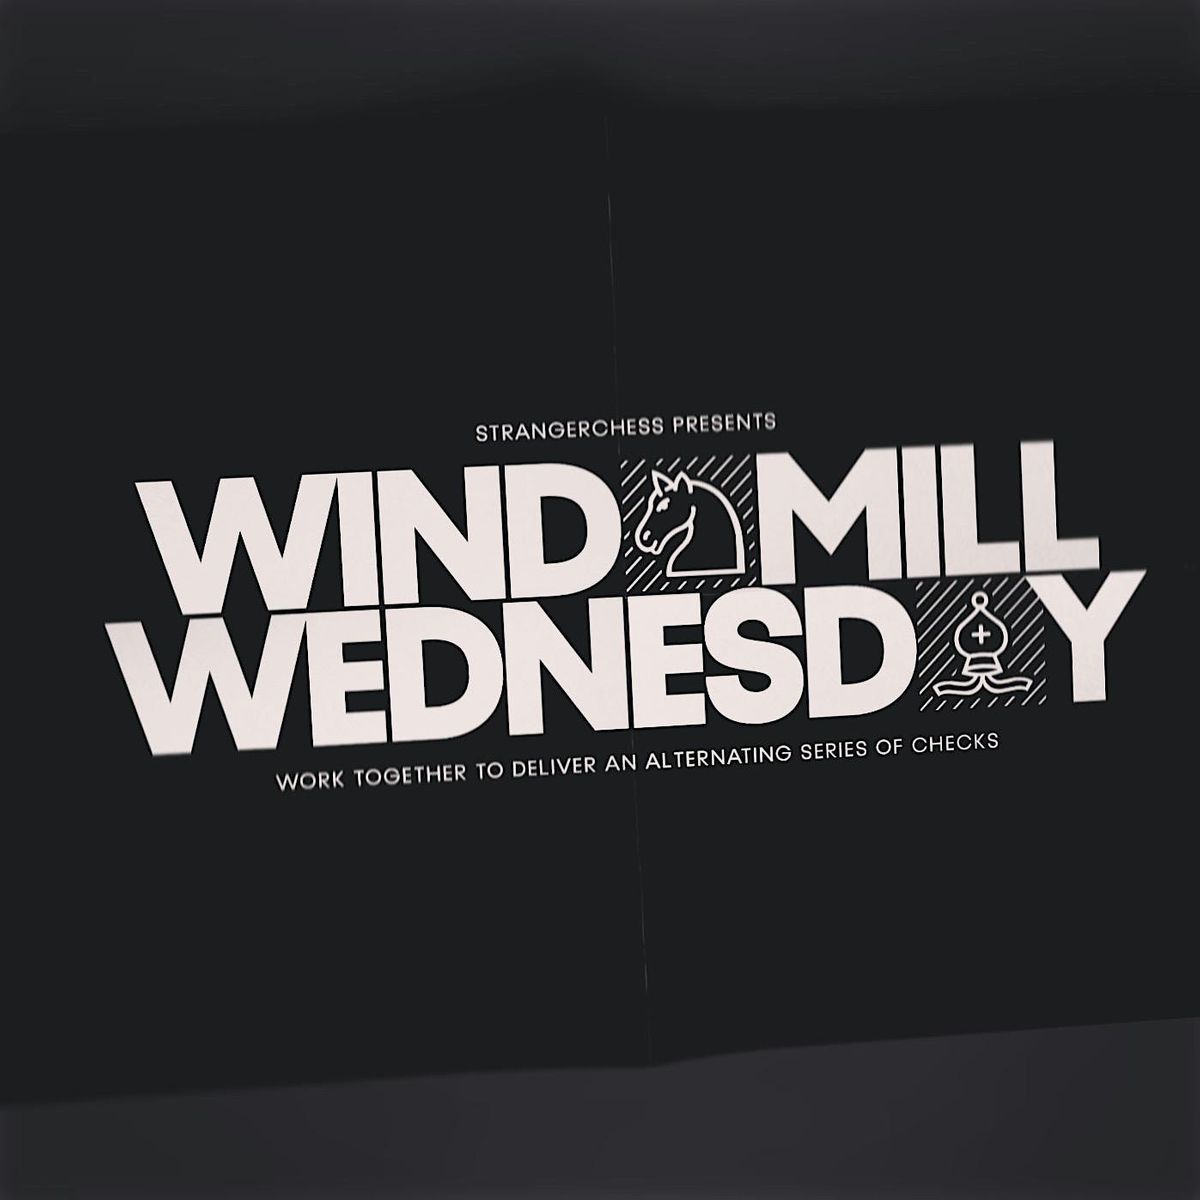 Windmill Wednesday